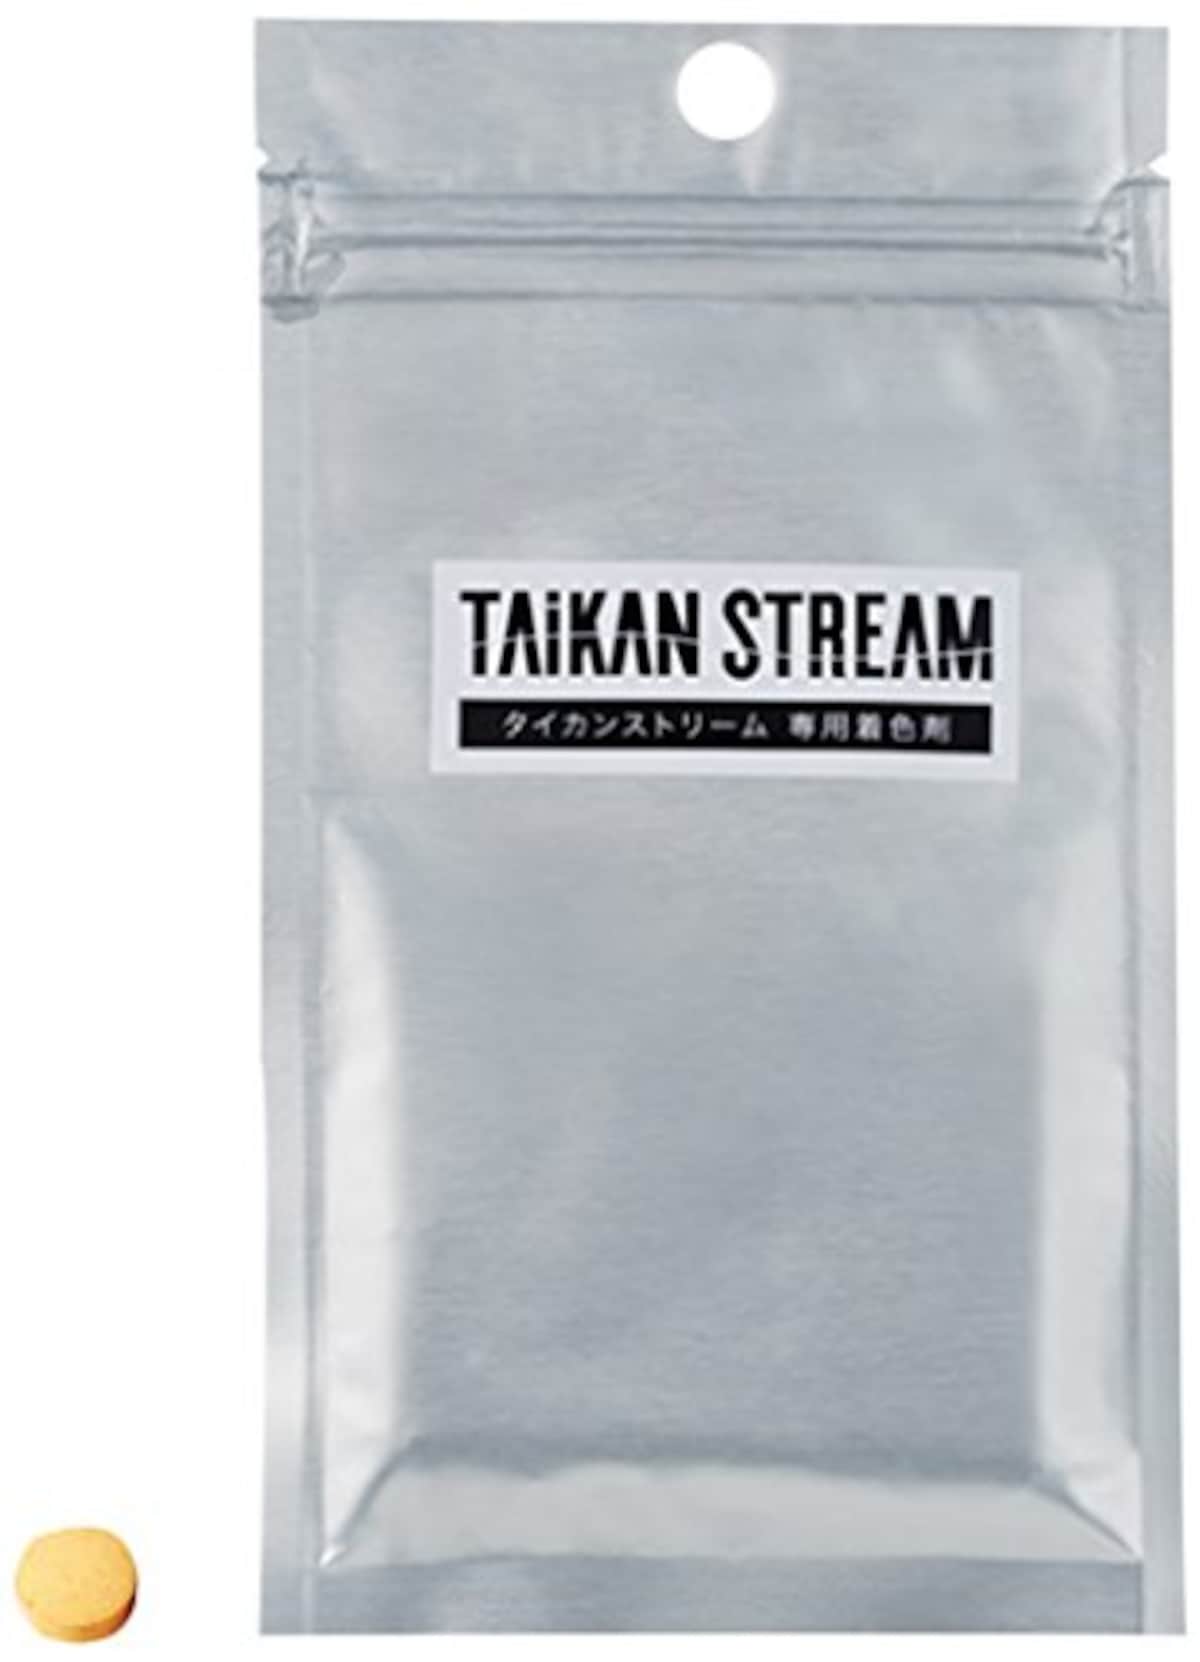 TAIKAN STREAM(タイカンストリーム) 専用着色剤